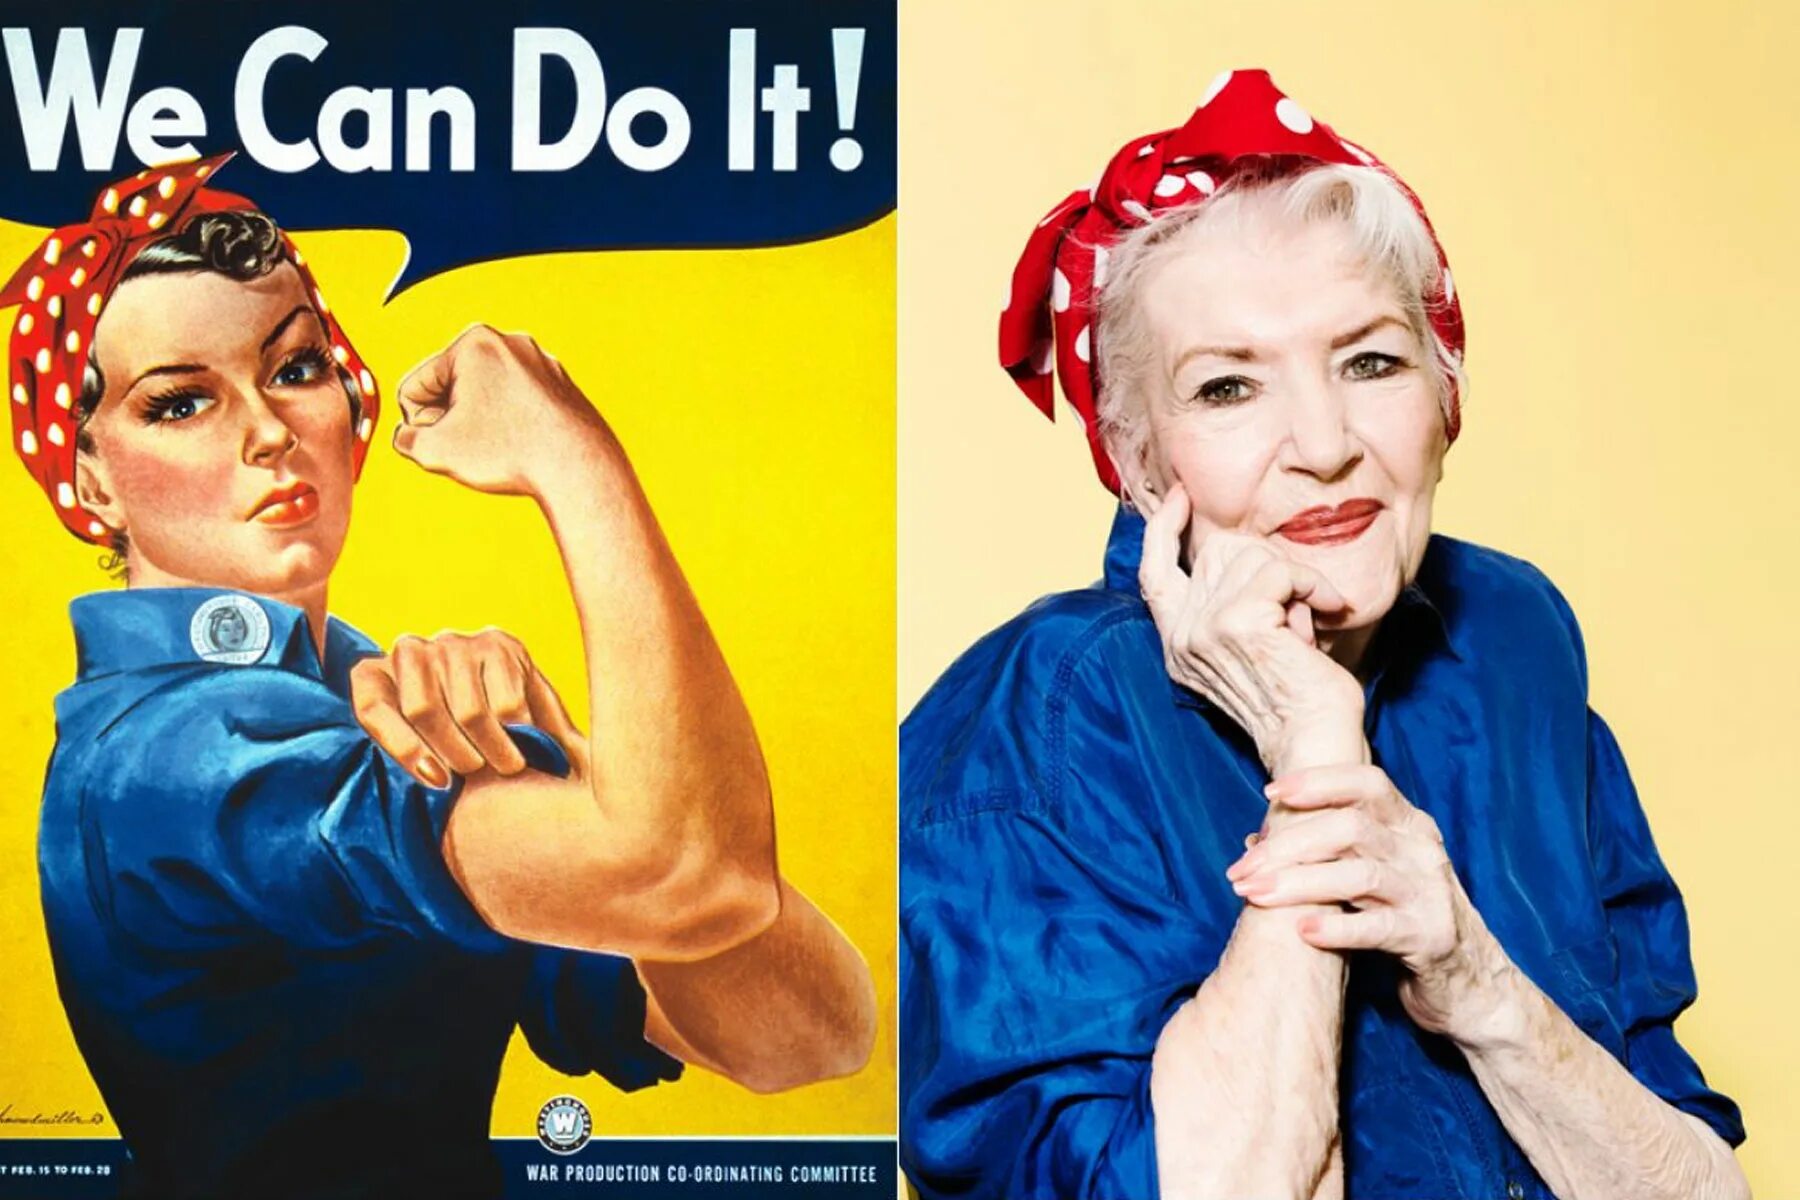 Рози Клепальщица Рокуэлл. Клепальщицы Рози (Rosie the Riveter). Клепальщица Рози плакат. Плакат «we can do it! ». Американская тетка